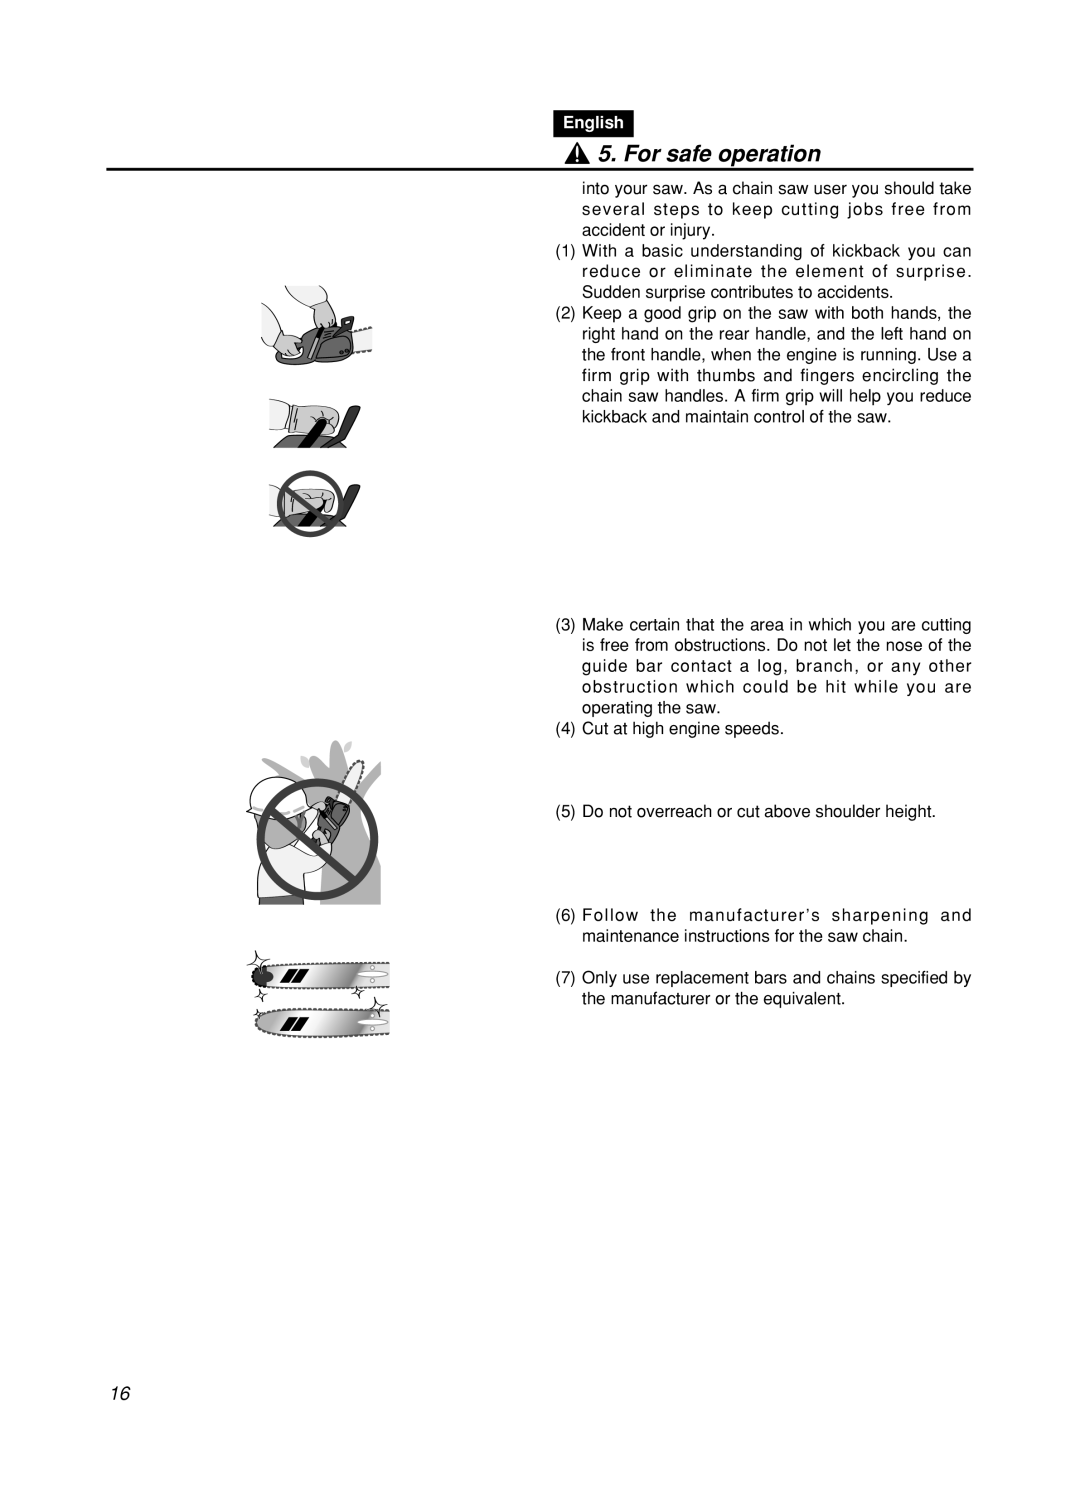 Zenoah GZ400 manual For safe operation, English, Cut at high engine speeds 